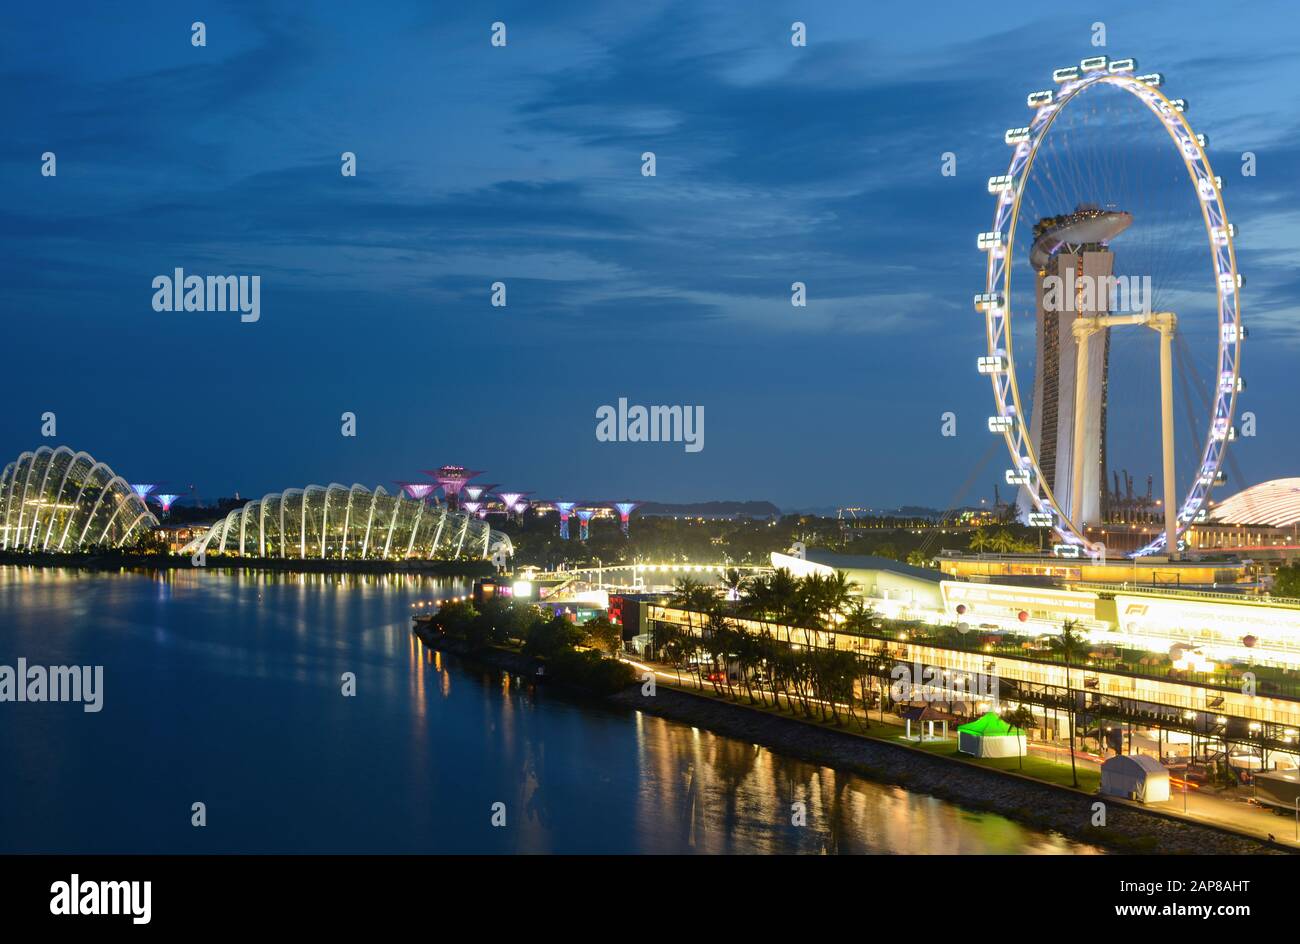 Singapore - September 9, 2018: Singapore Flyer and Marina Bay landscape at night Stock Photo